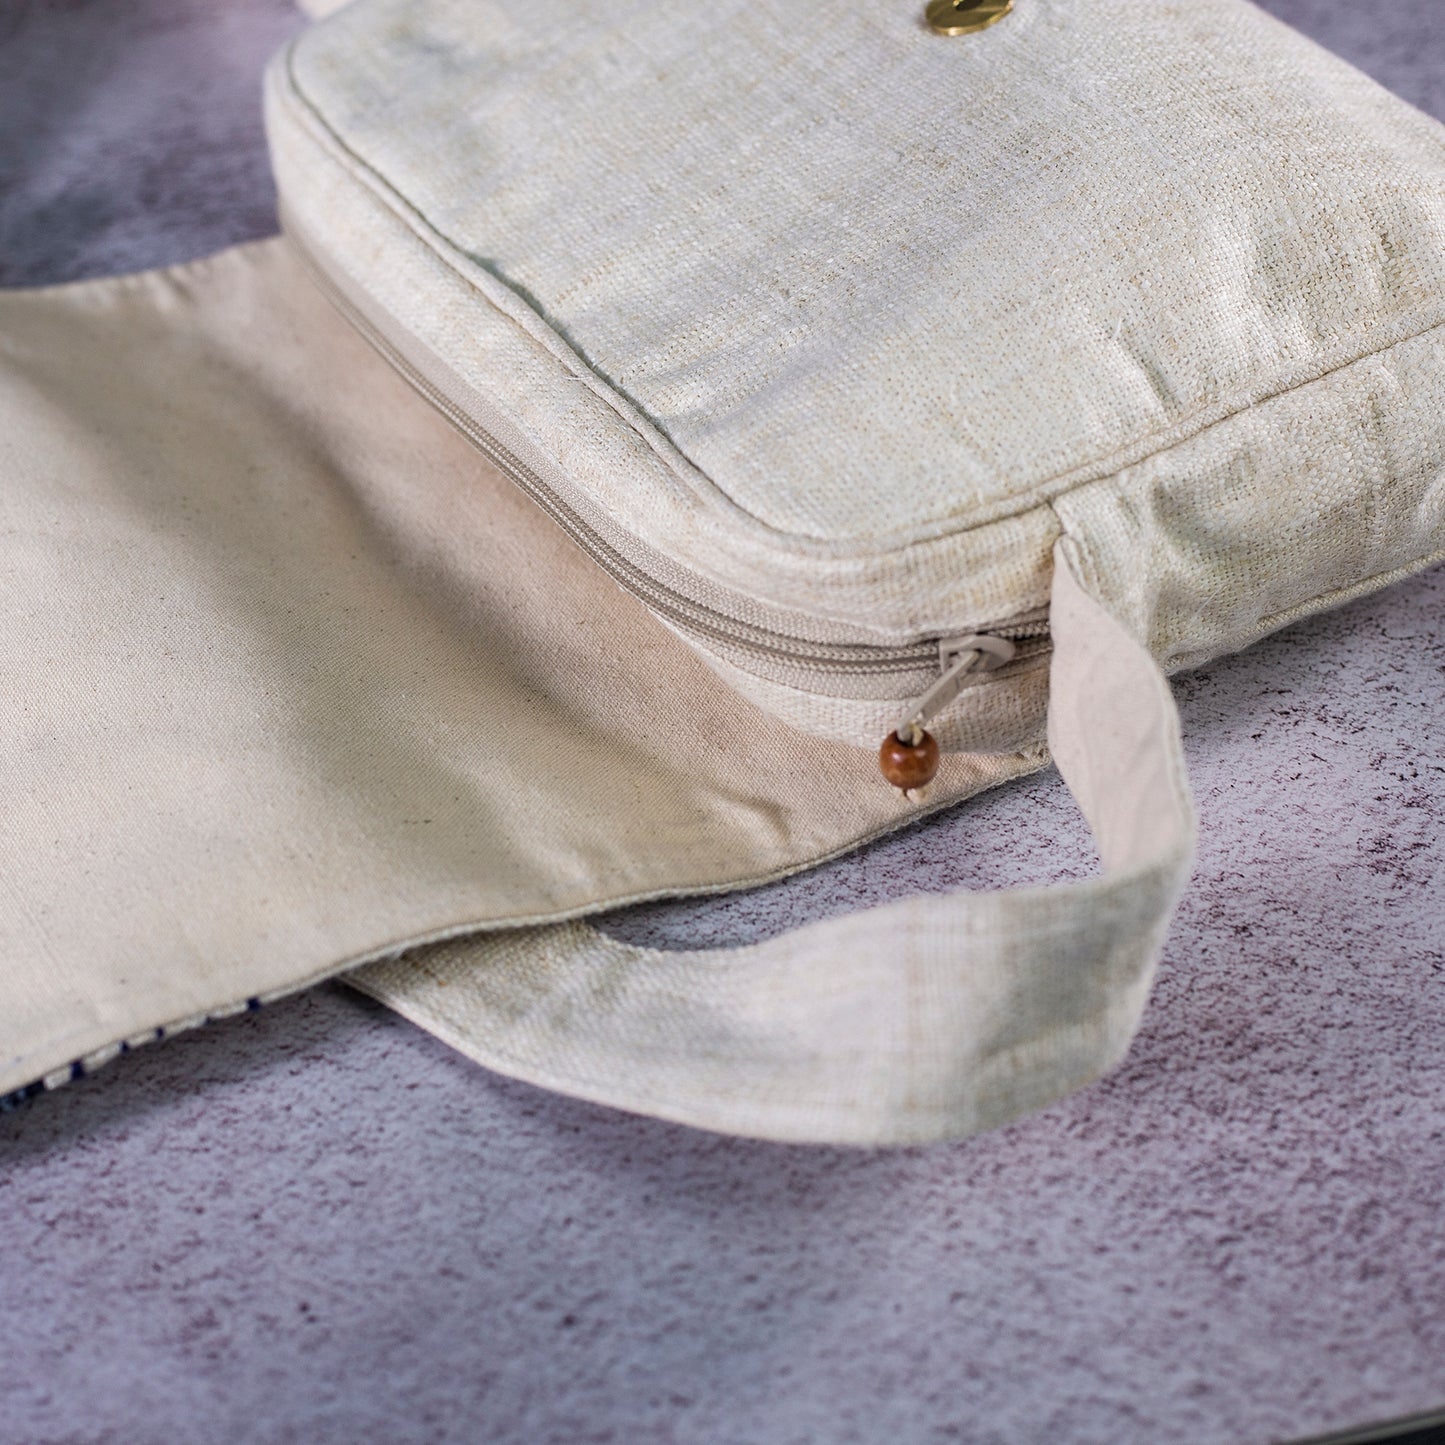 Natural hemp cross-body bag, batik and hand-stitched flap